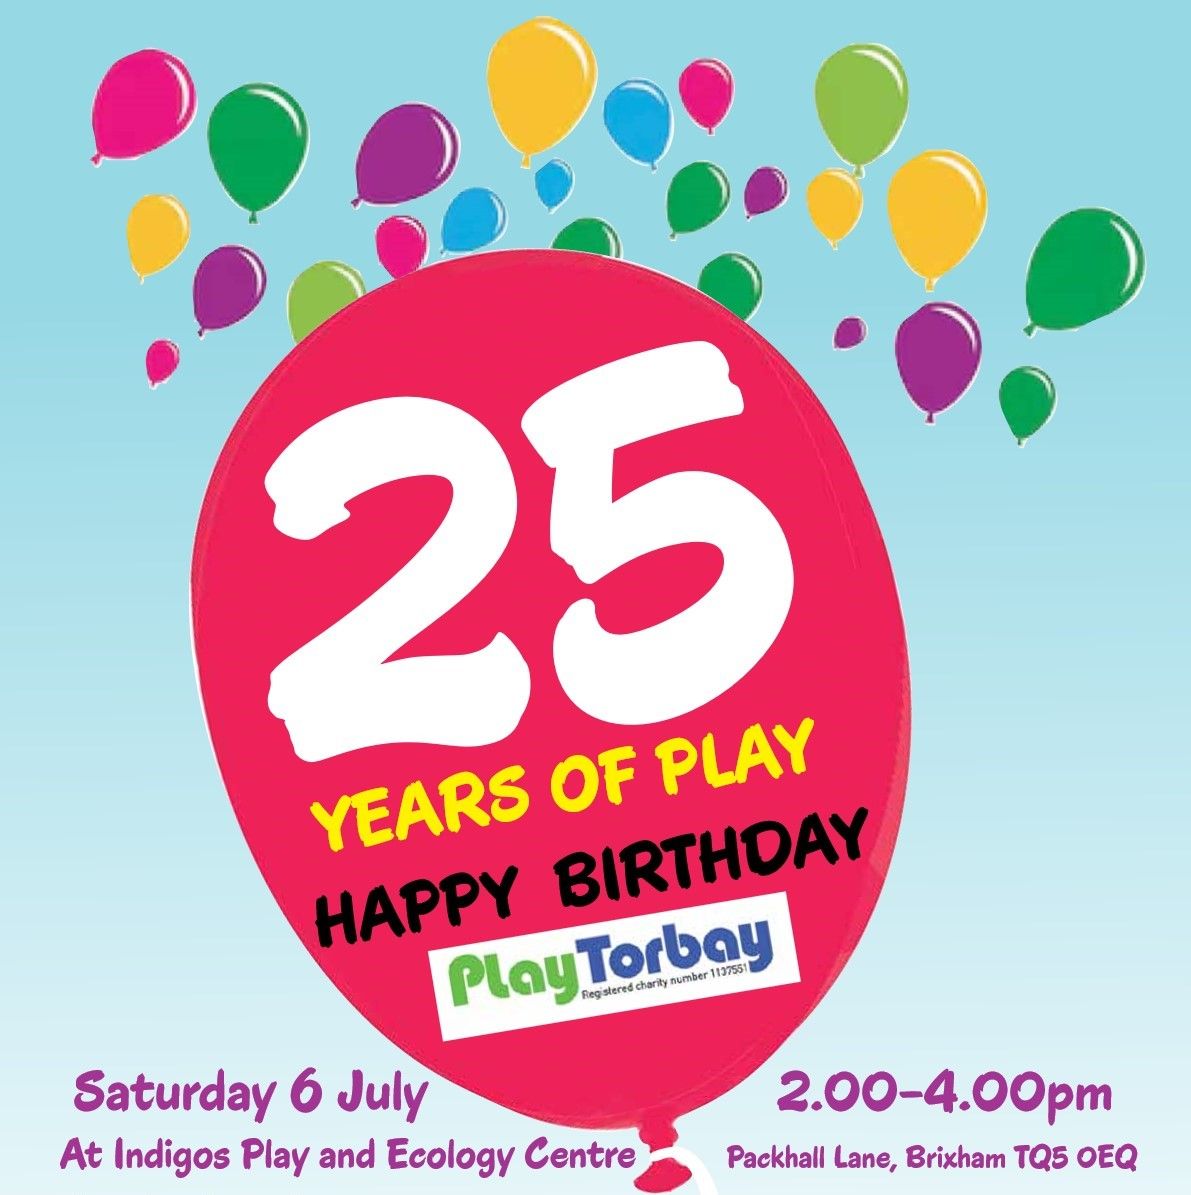 Play Torbay's Turning 25!